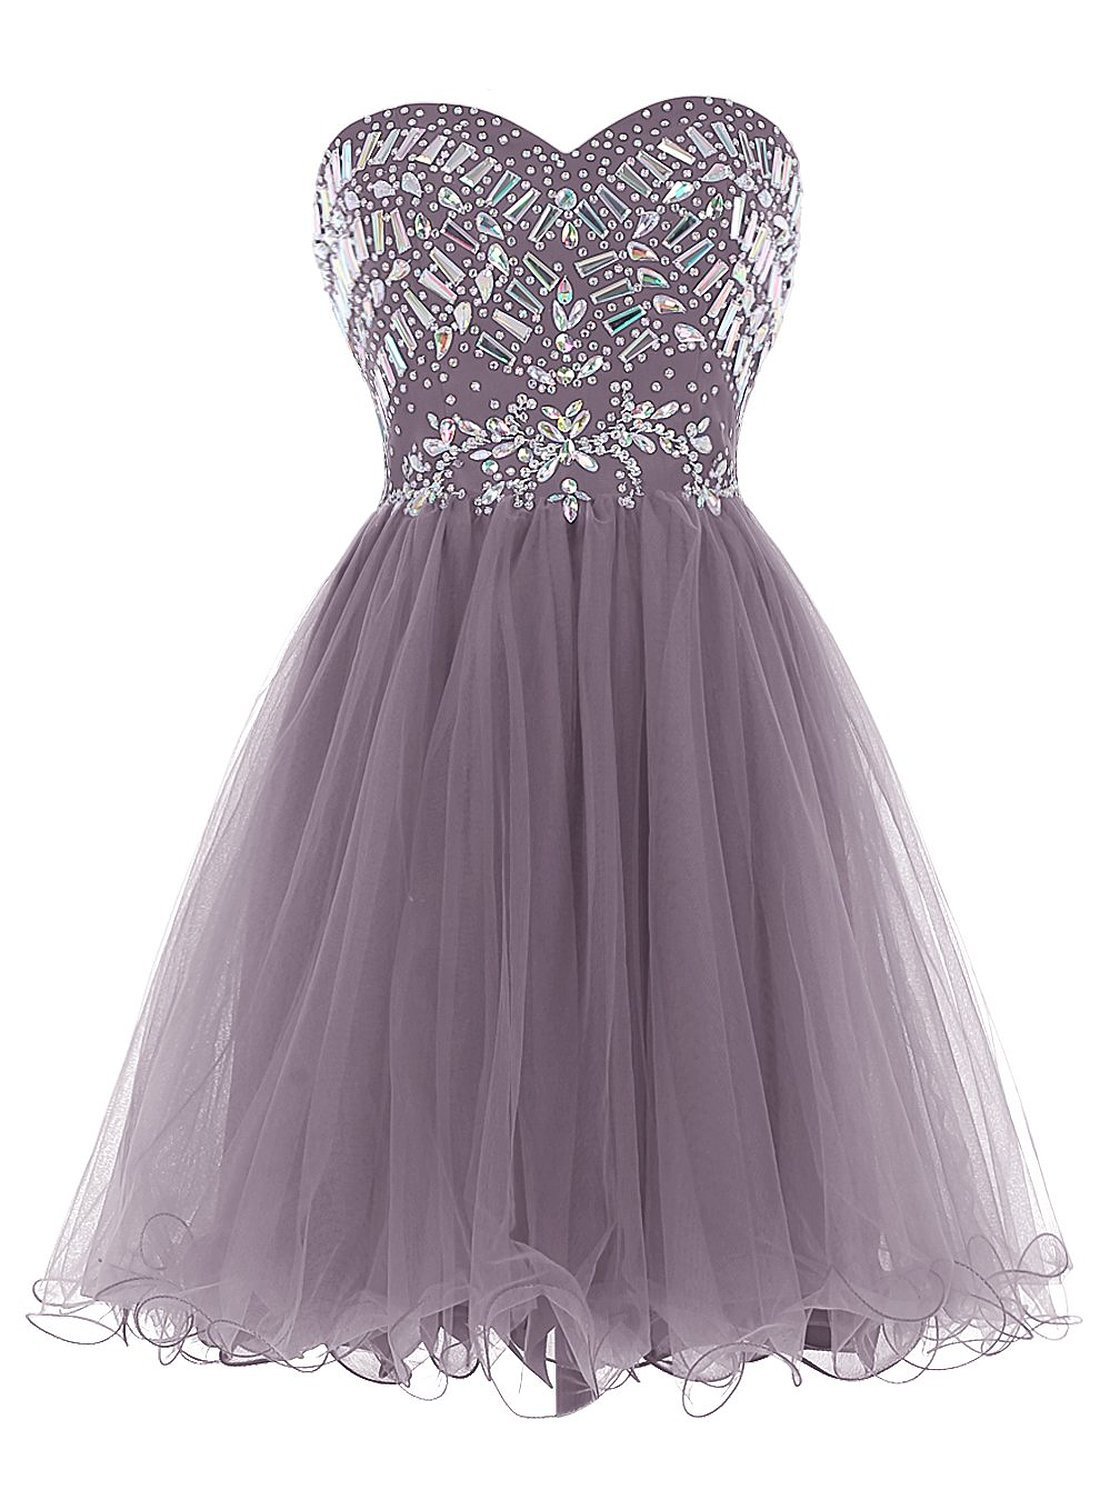 Custom Made Purple Sweetheart Neckline With Diamond Embellished Bodice Tulle Short Evening Dress, Homecoming Dress, Cocktail Dresses, Graduation